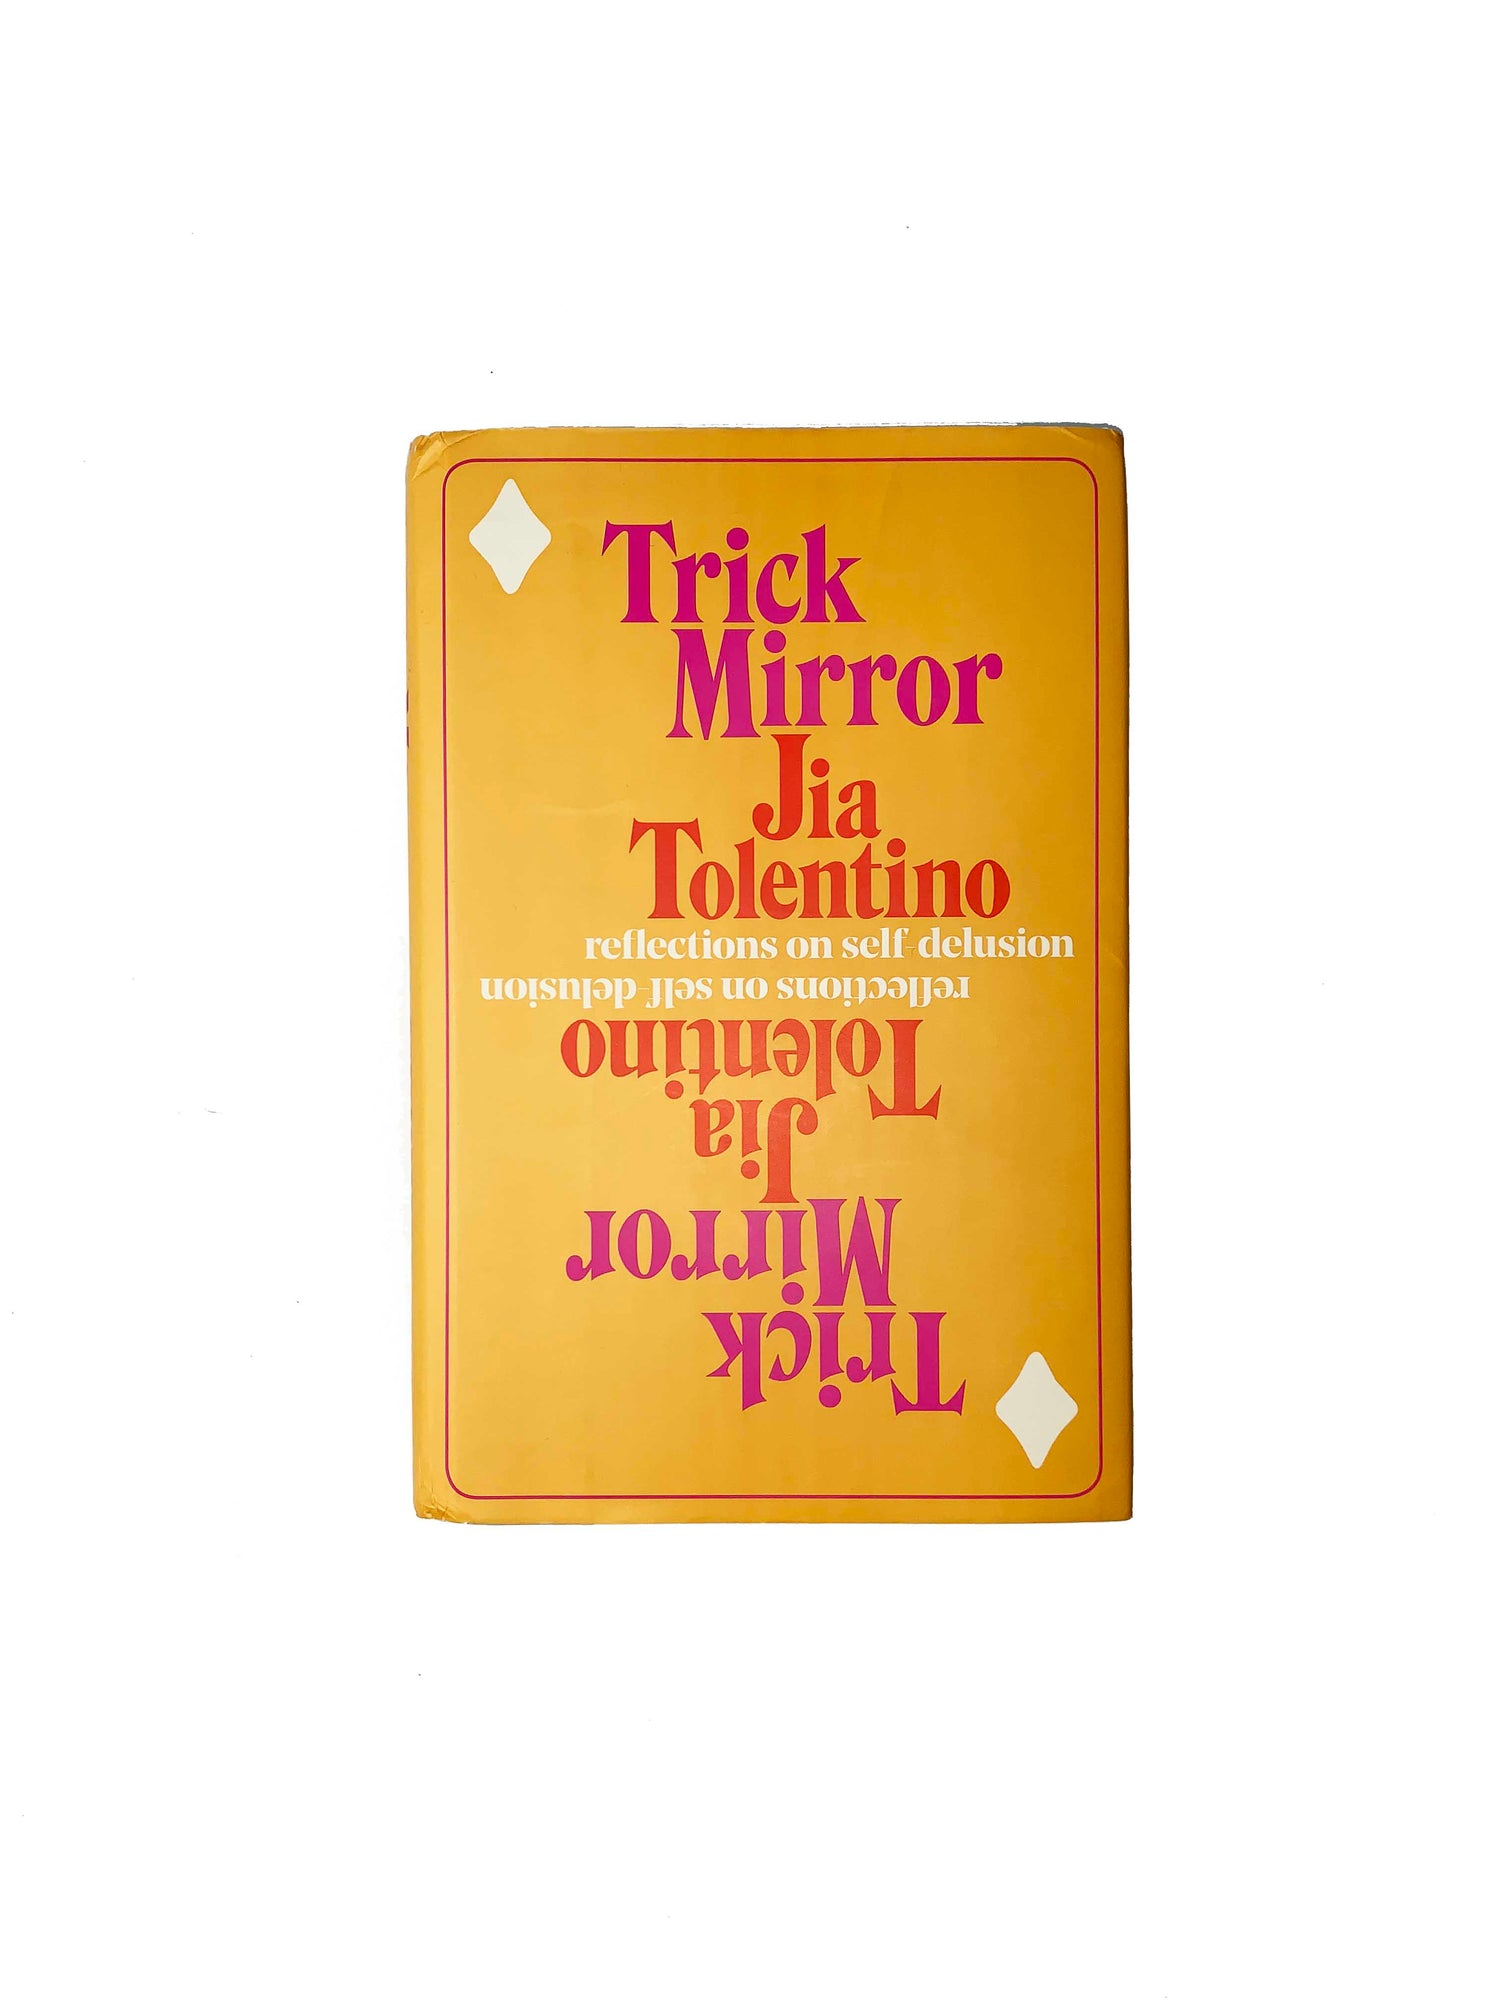 Trick Mirror book, by Jia Tolentino